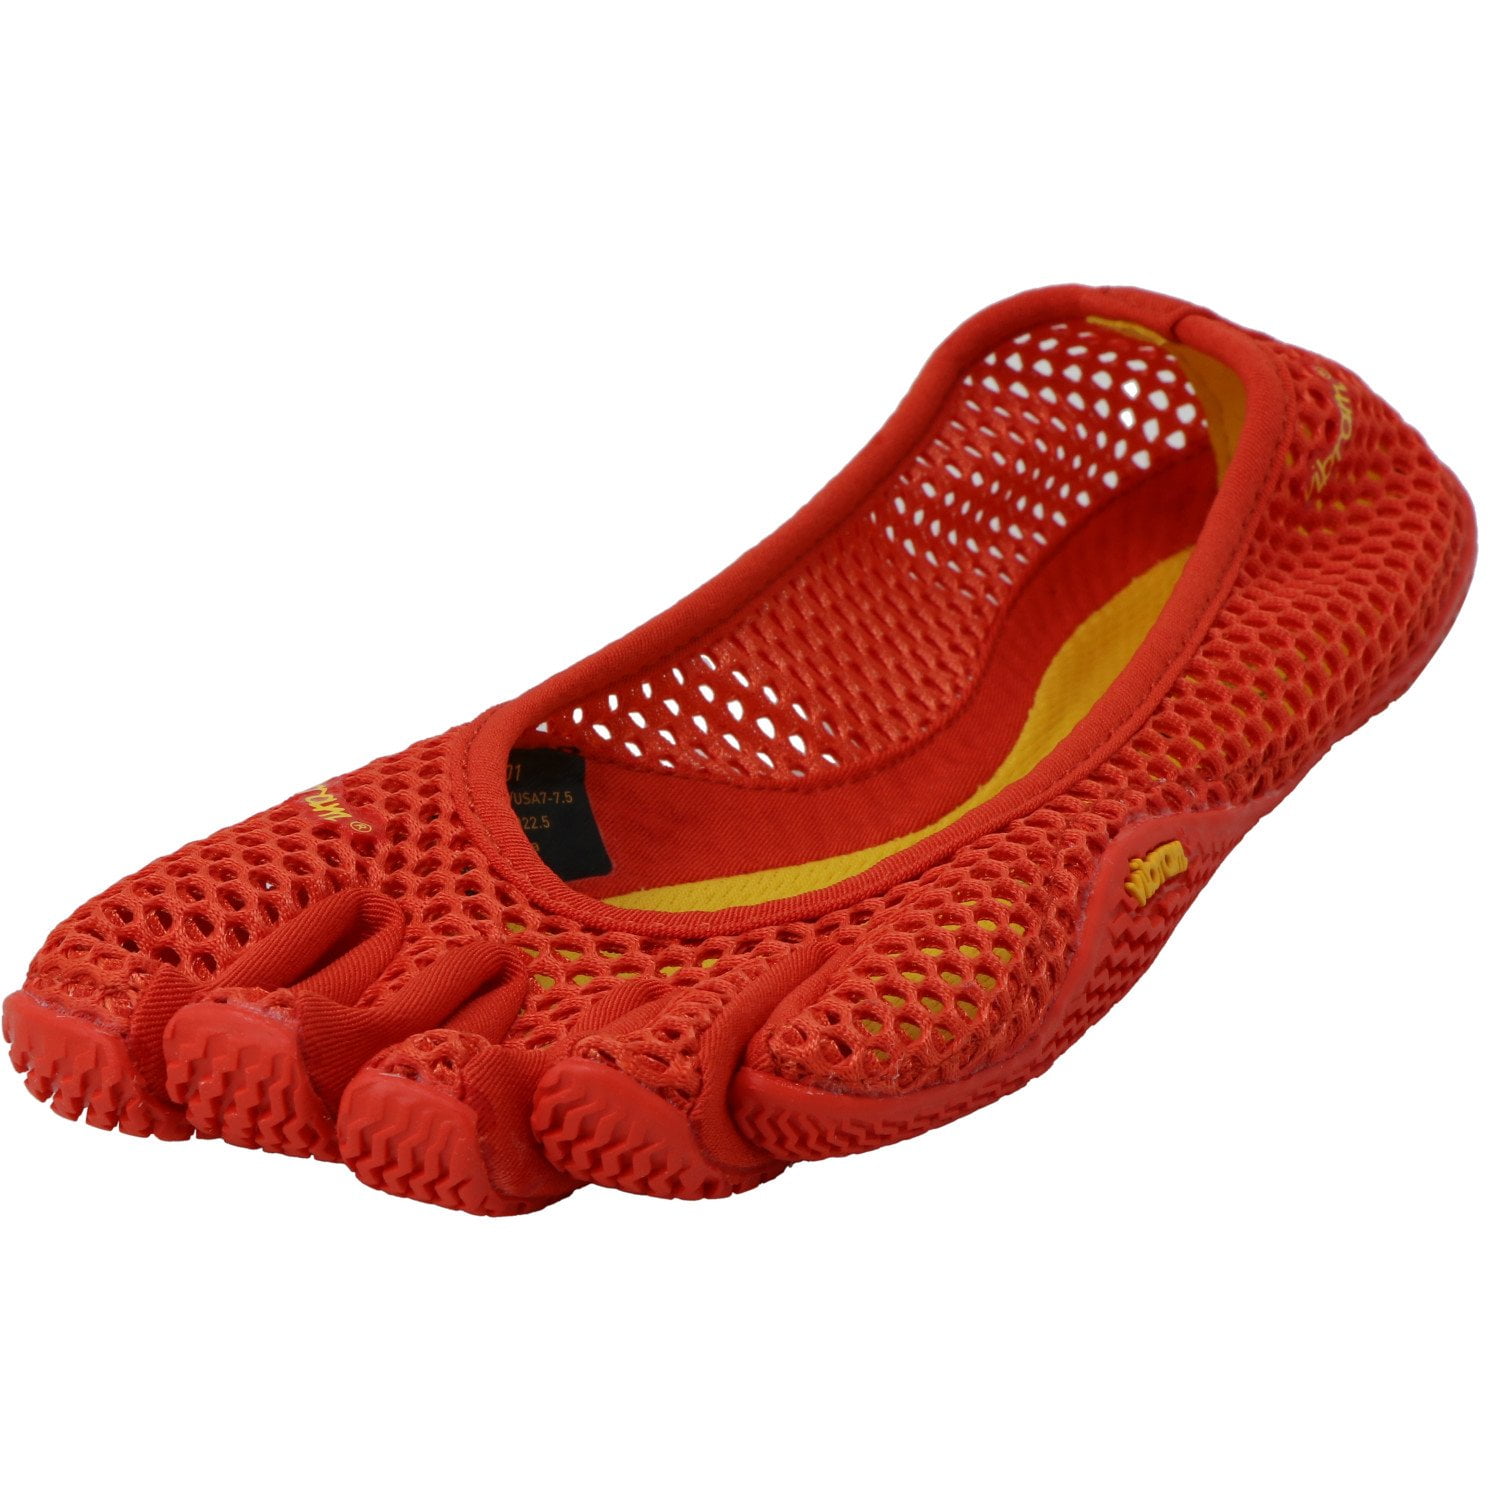 Vi-B Burnt Orange Yoga Shoe - 6.5 